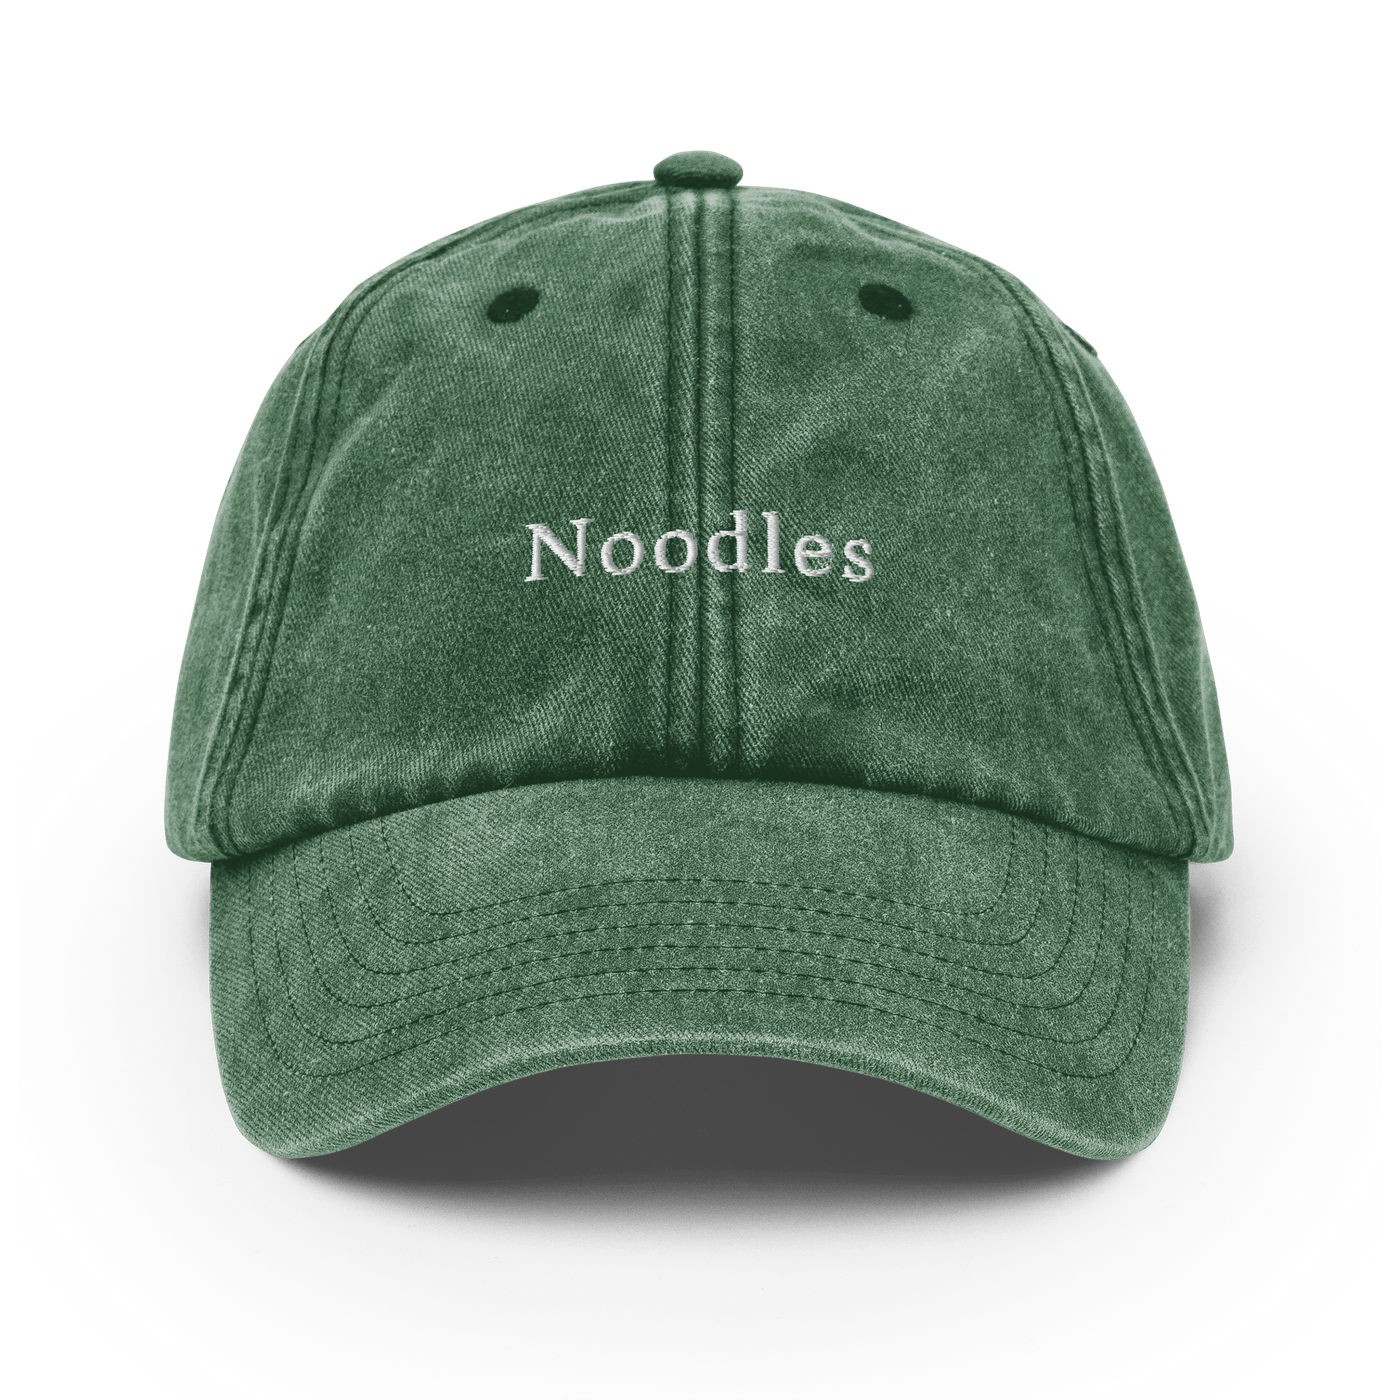 Noodles Vintage Hat - Vintage Bottle Green - - Just Another Cap Store